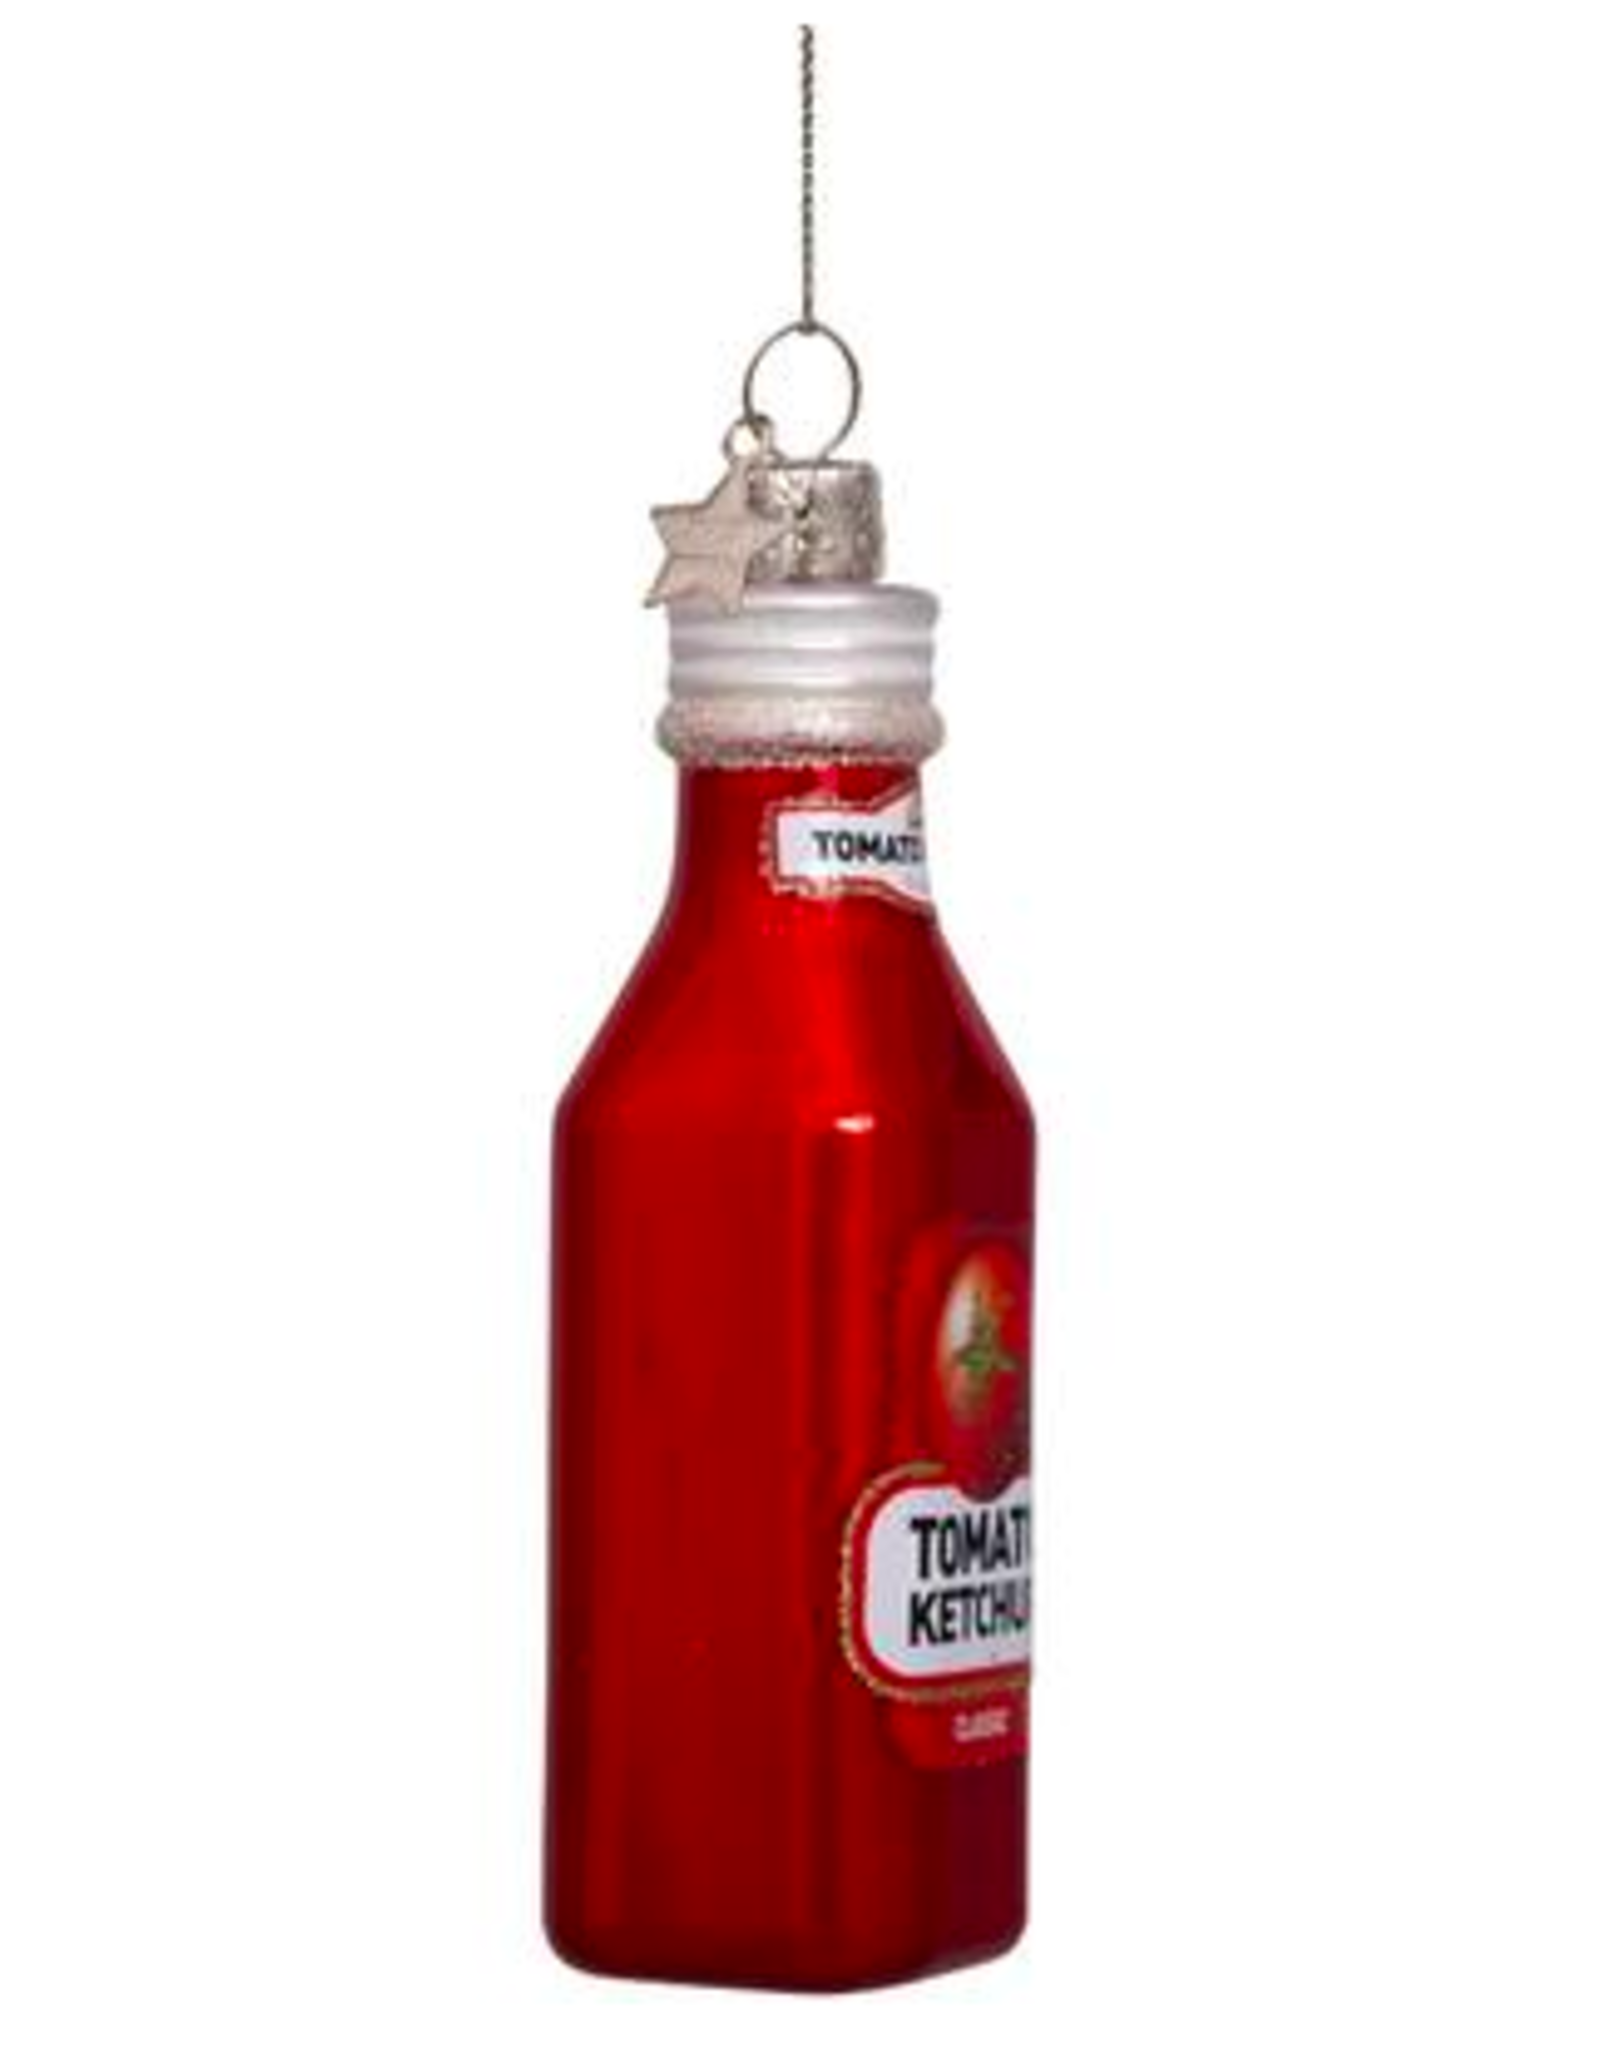 Vondels Ornament glass red opal ketchup bottleH10.5cm